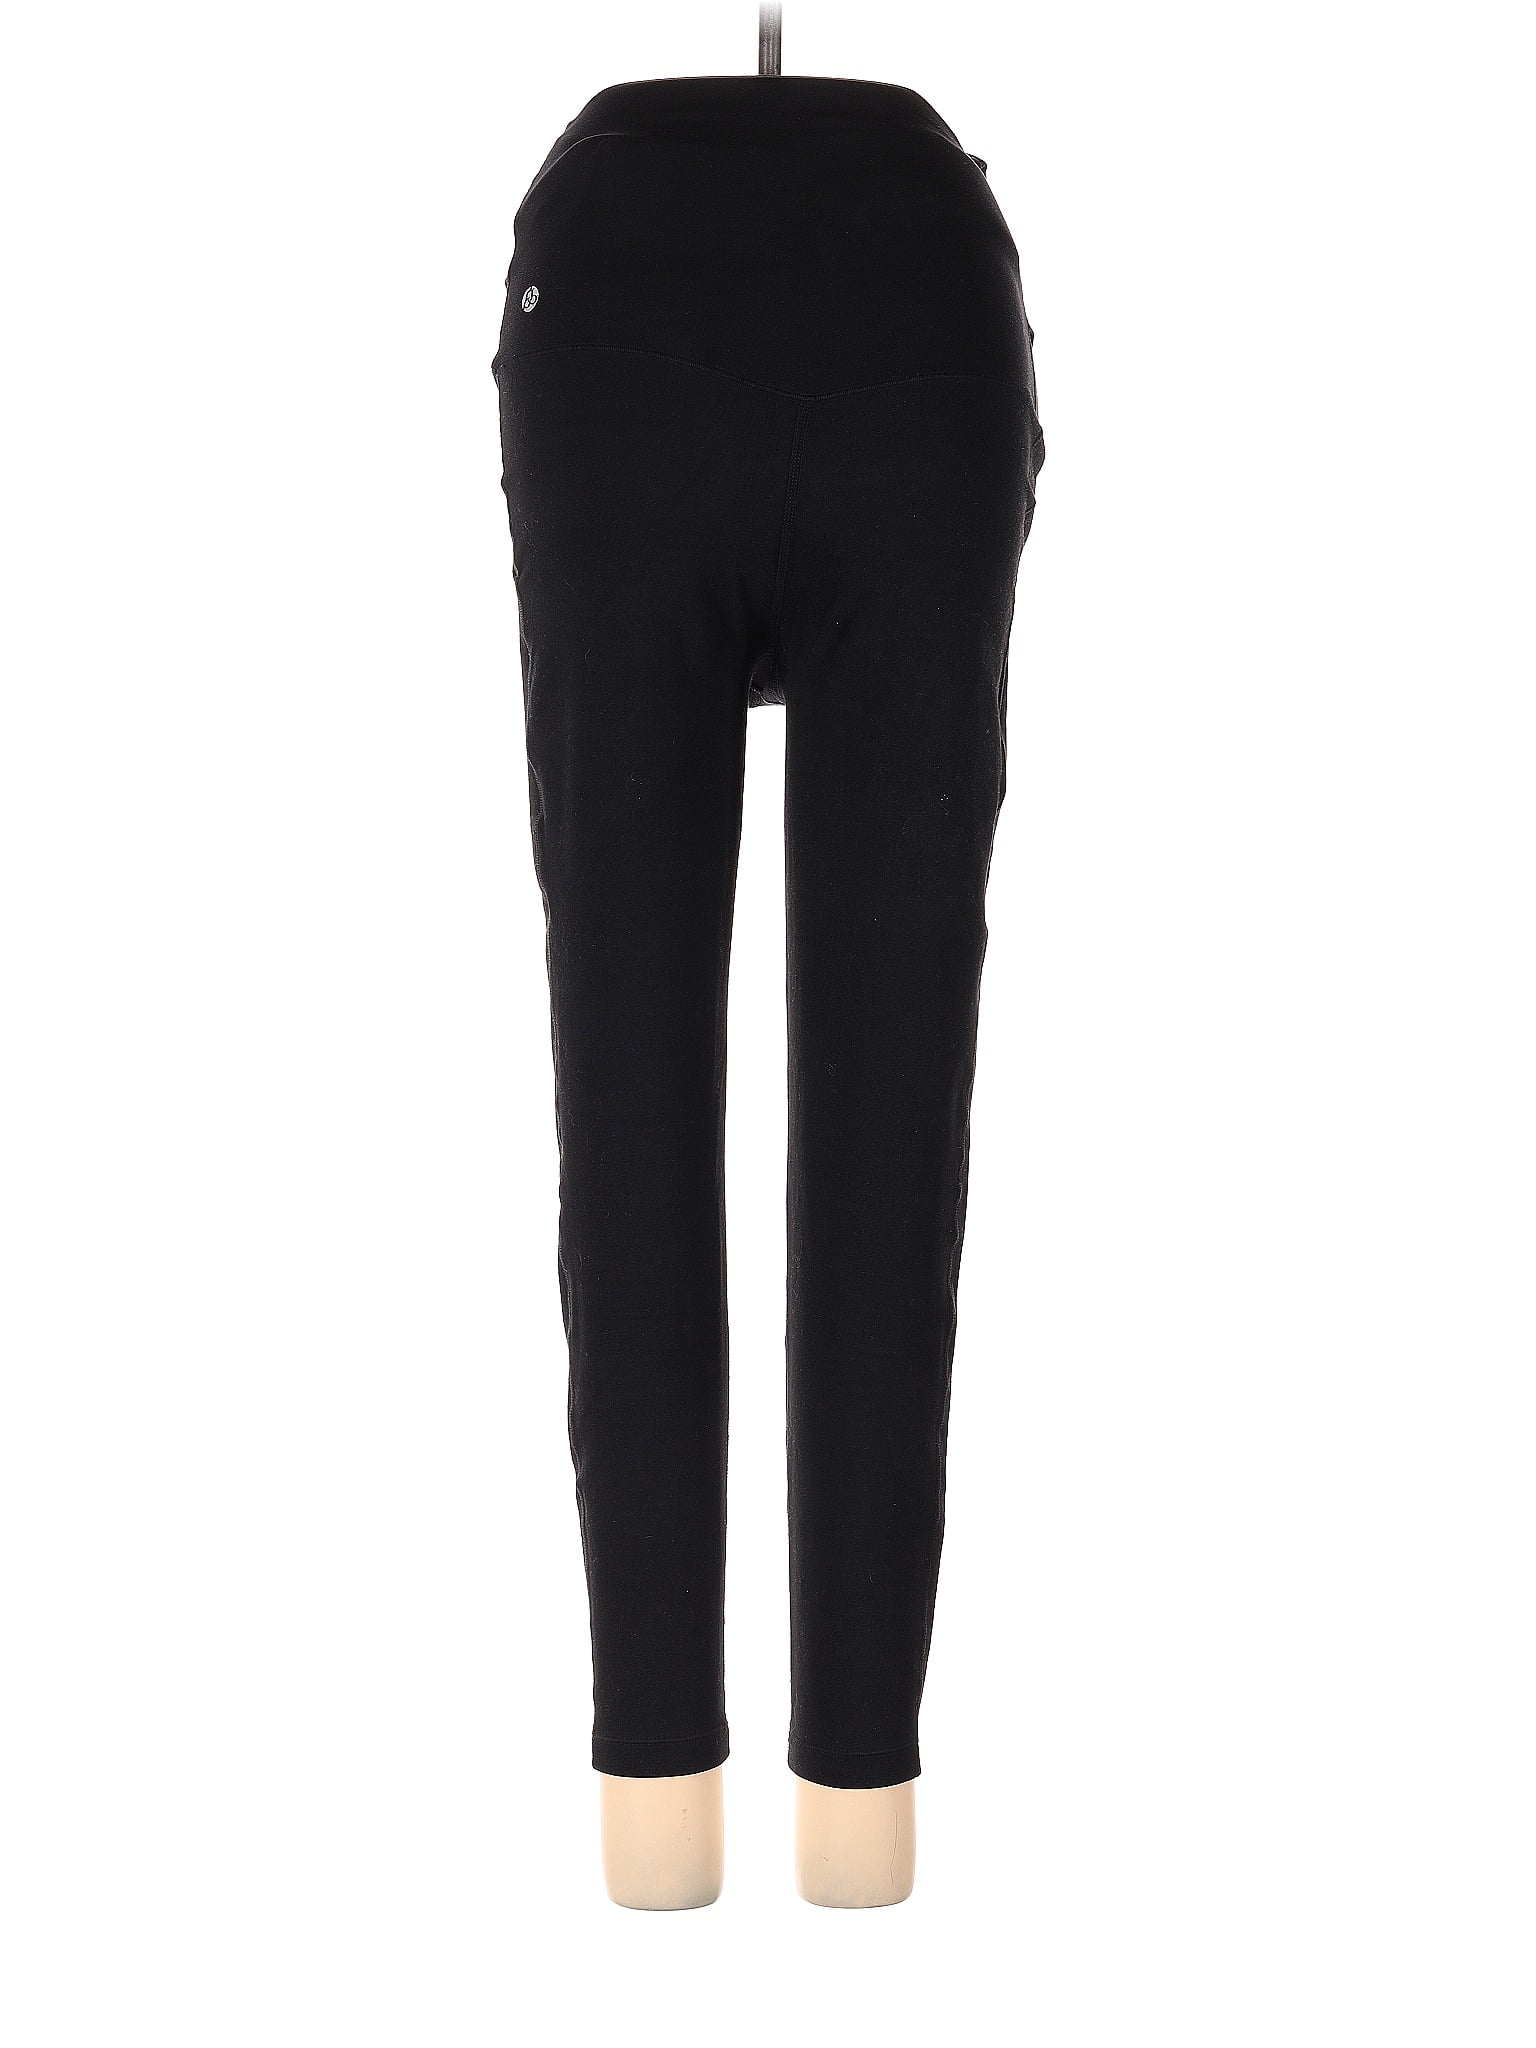 Zella Solid Black Active Pants Size S - 59% off